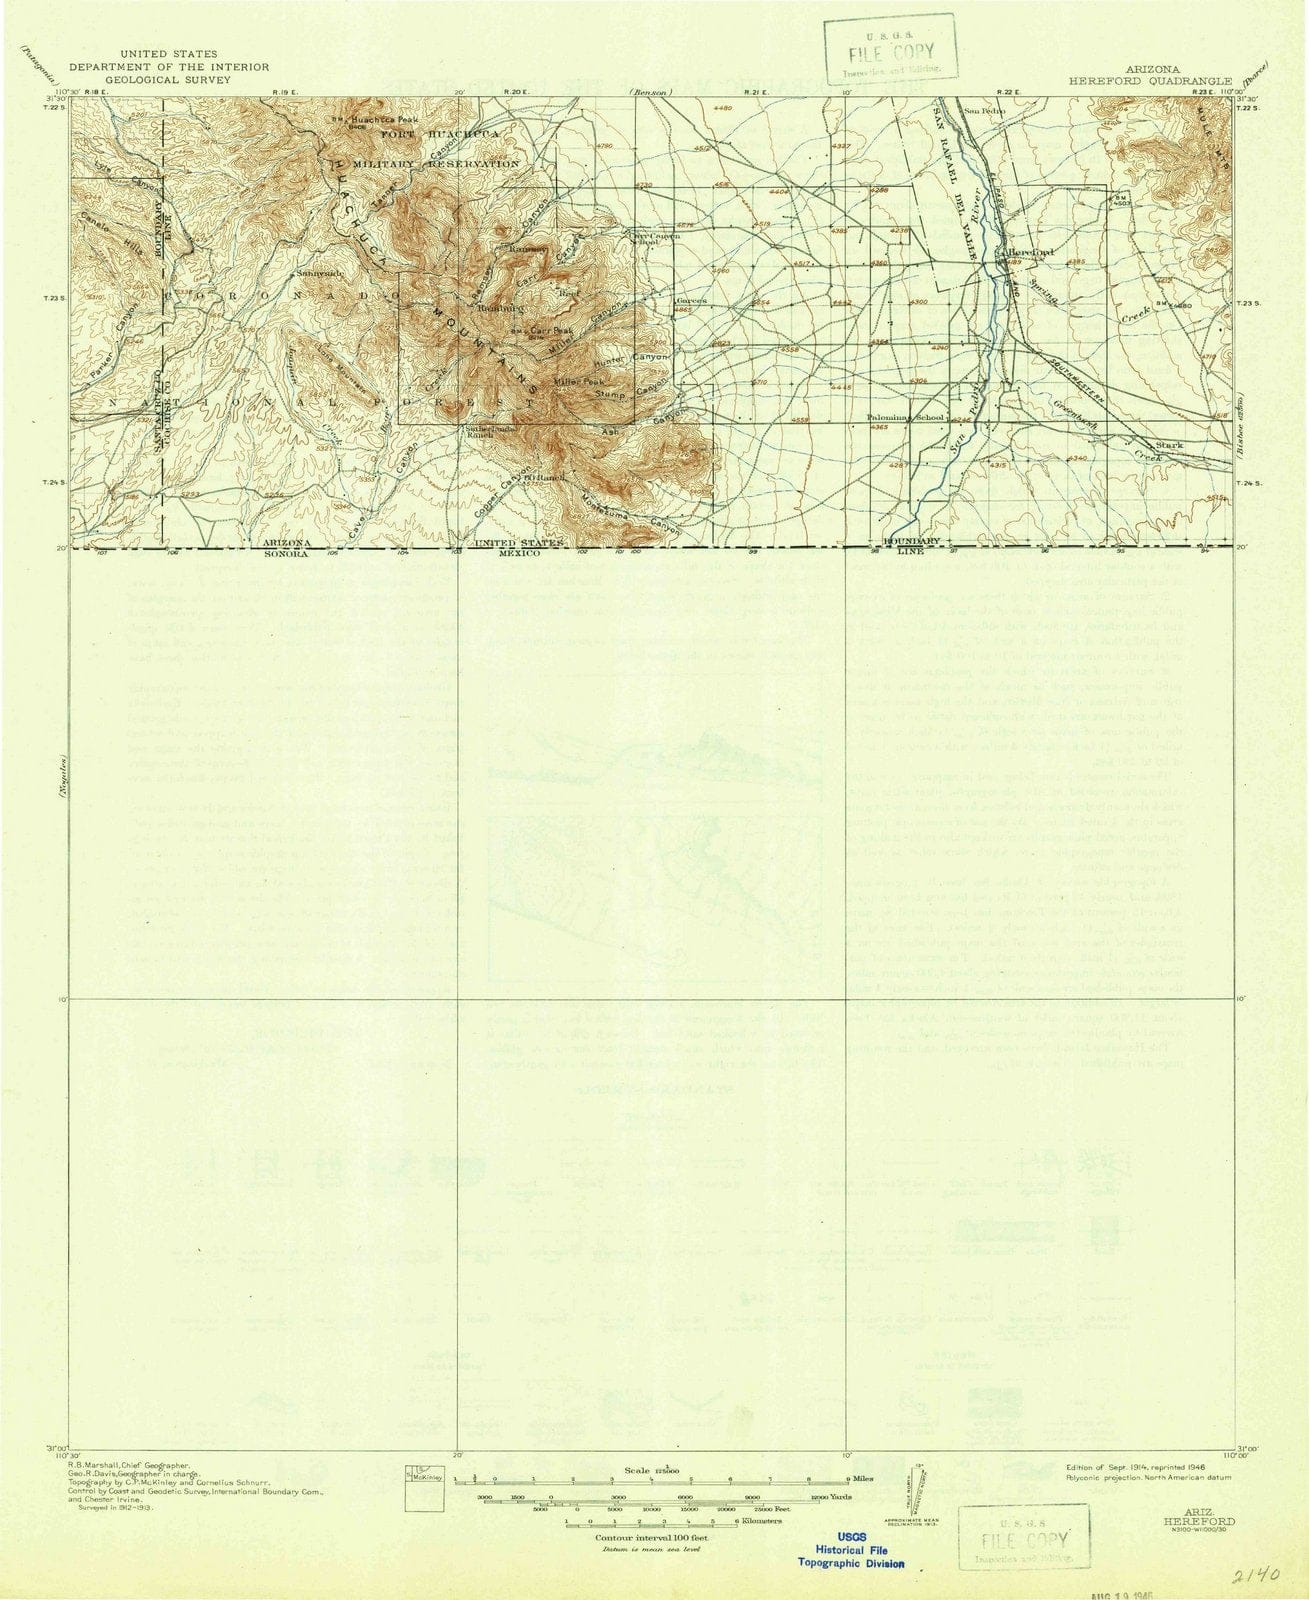 1914 Hereford, AZ - Arizona - USGS Topographic Map